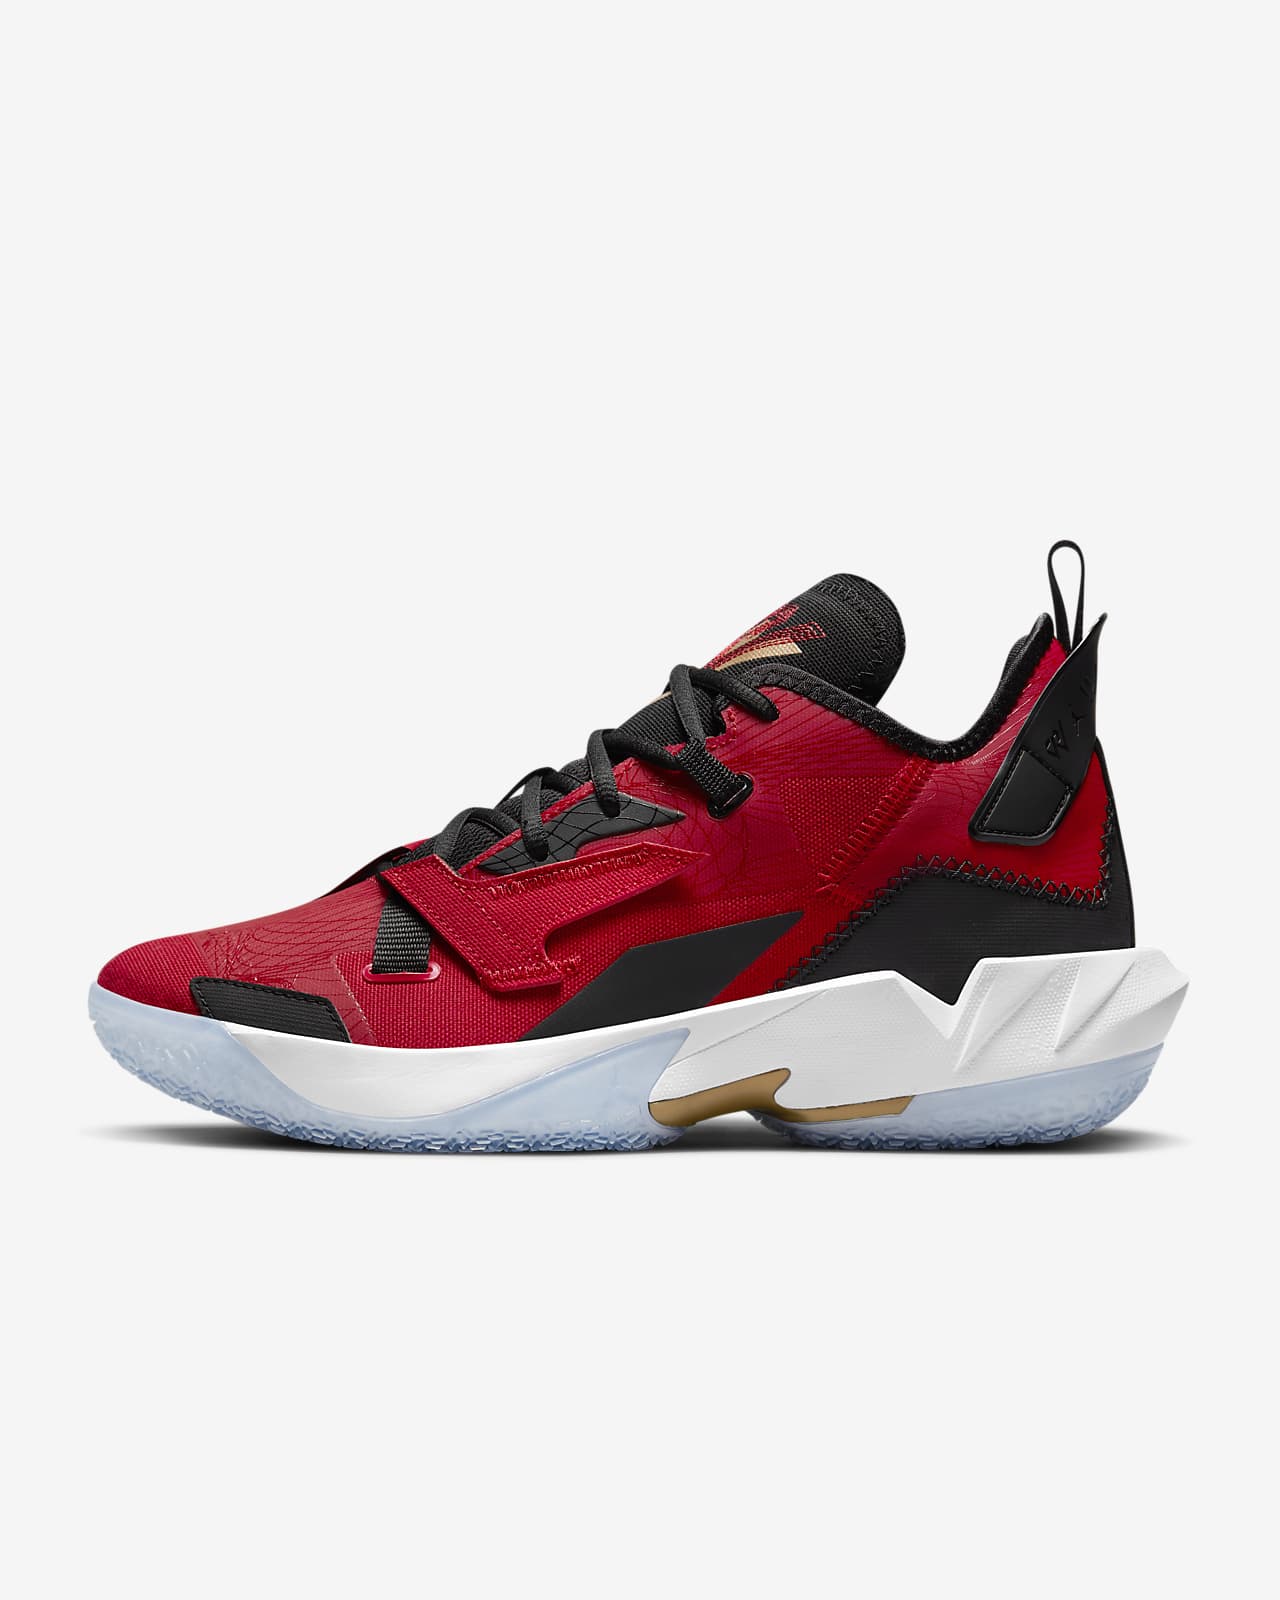 Jordan 'Why Not?' Zer0.4 Basketball Shoes